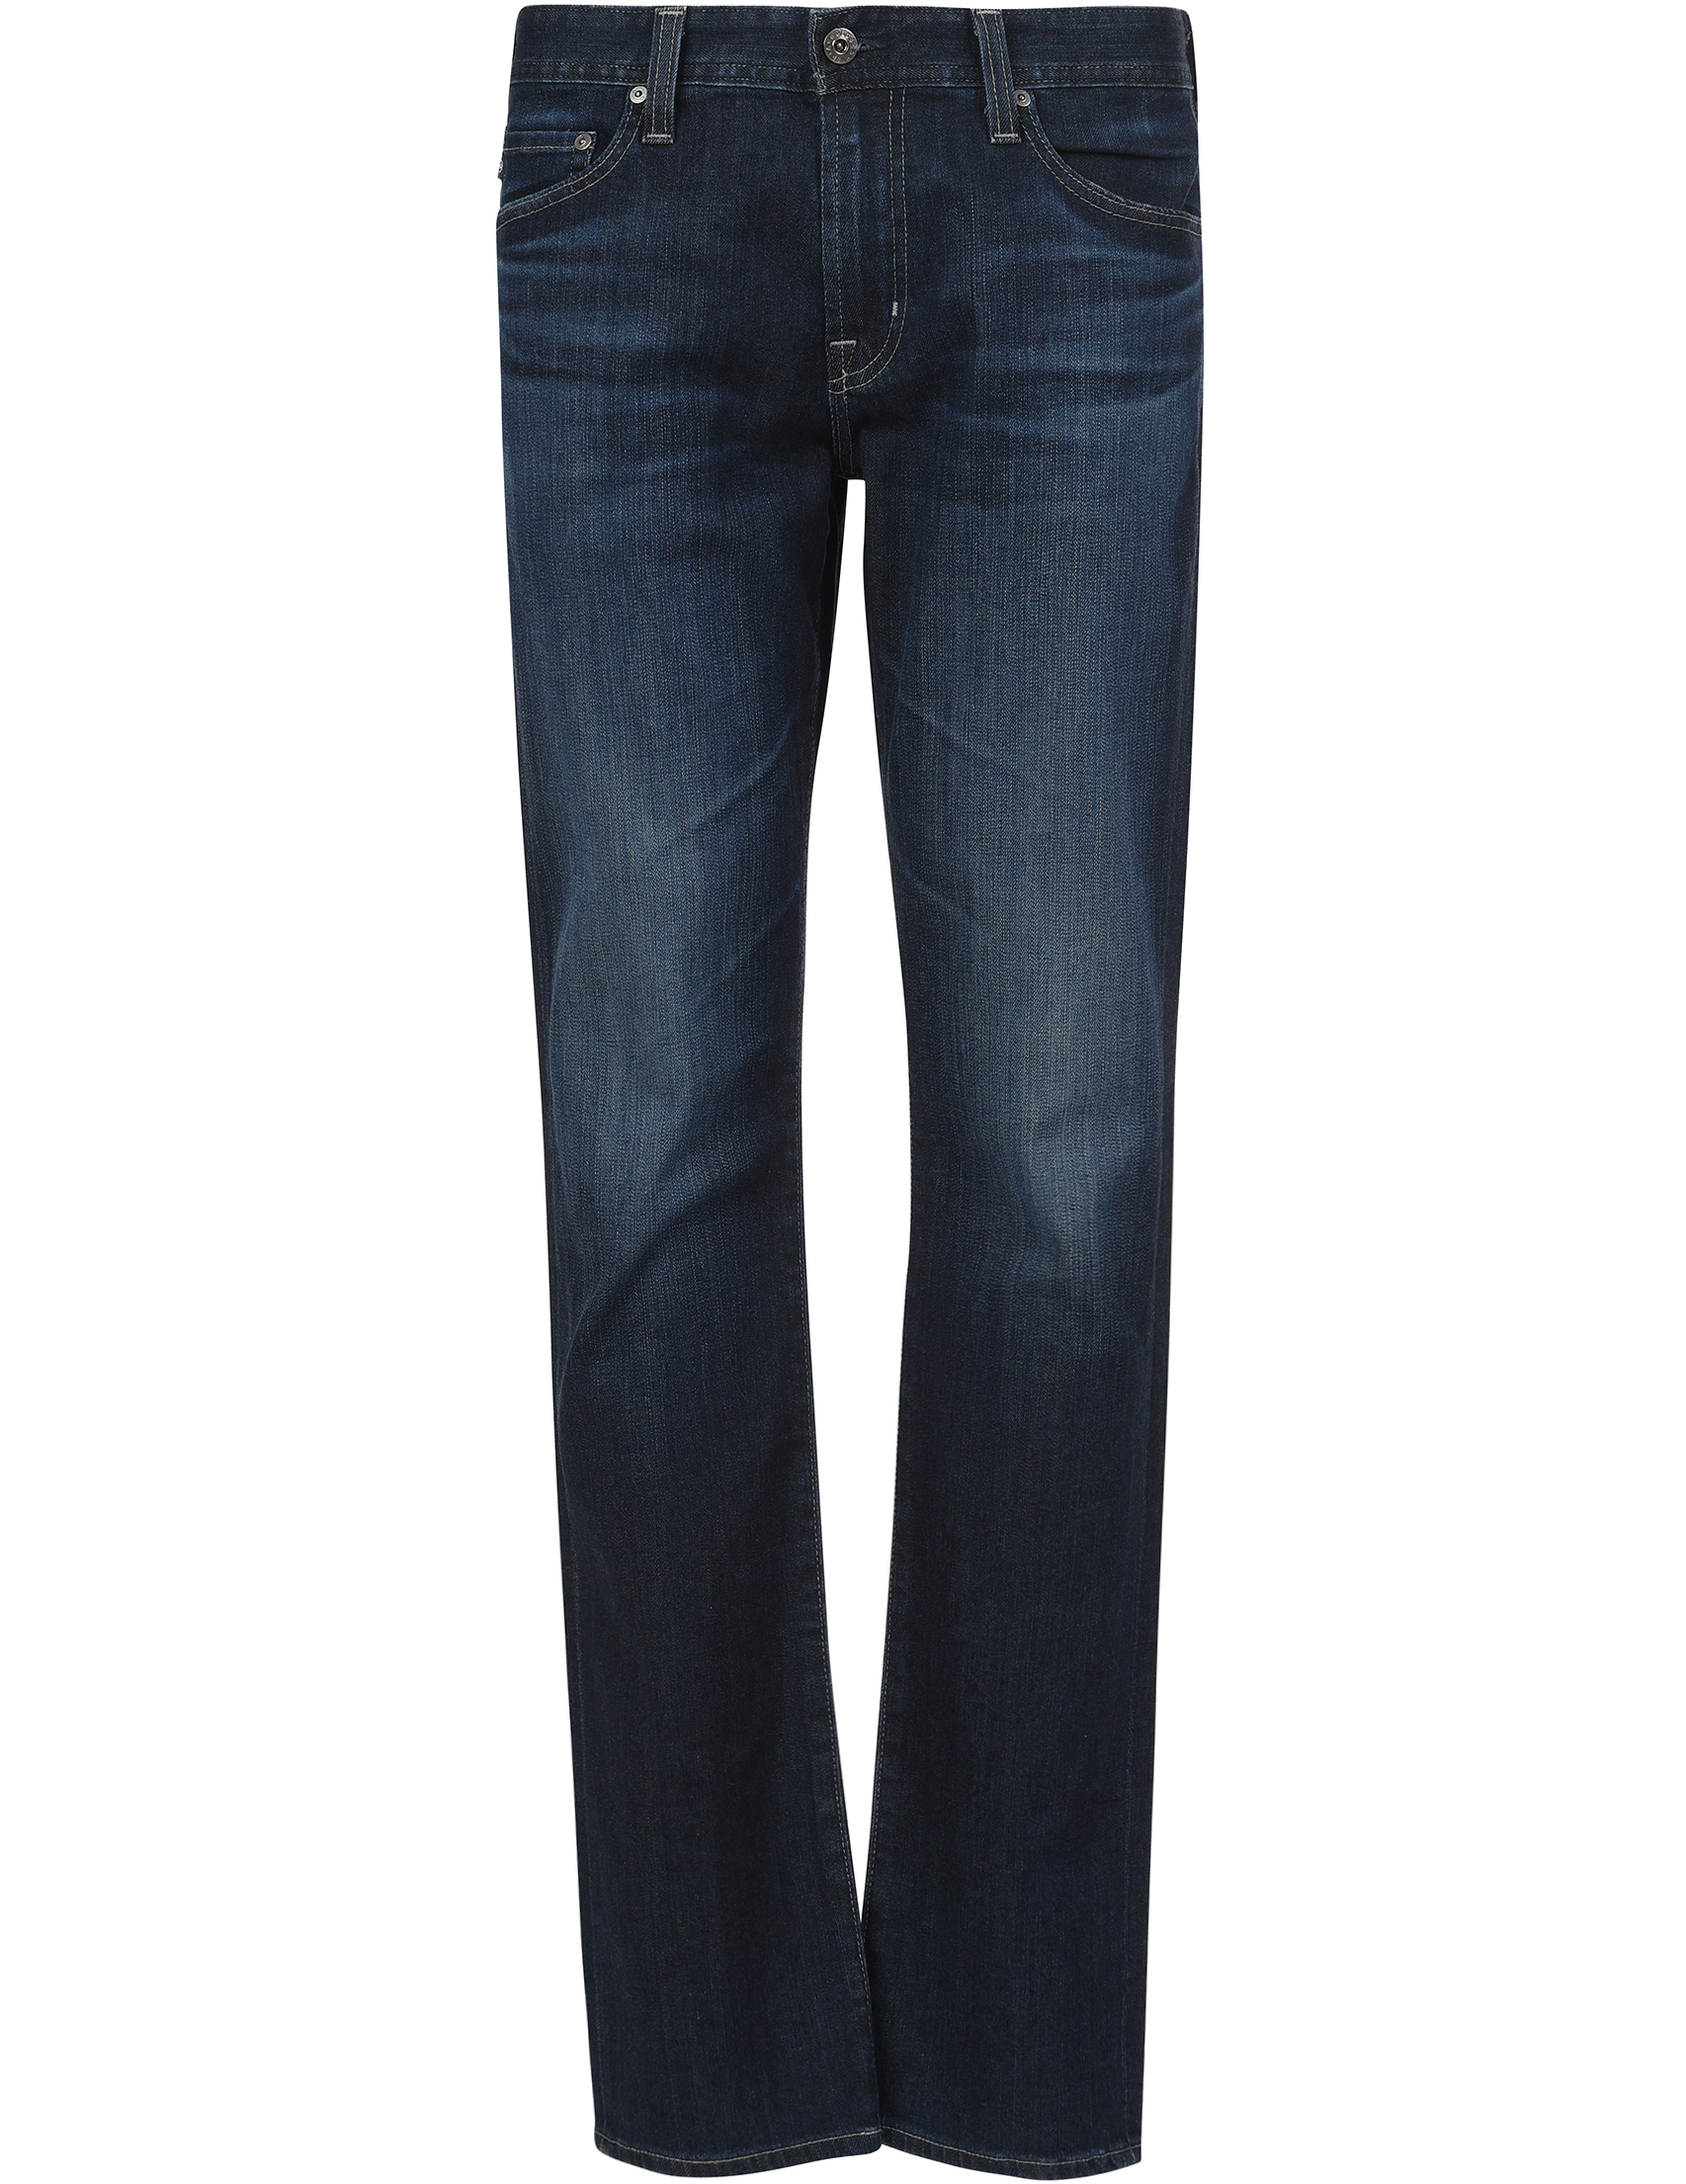 Мужские джинсы ADRIANO GOLDSCHMIED 1174-PVC-PTRN_blue